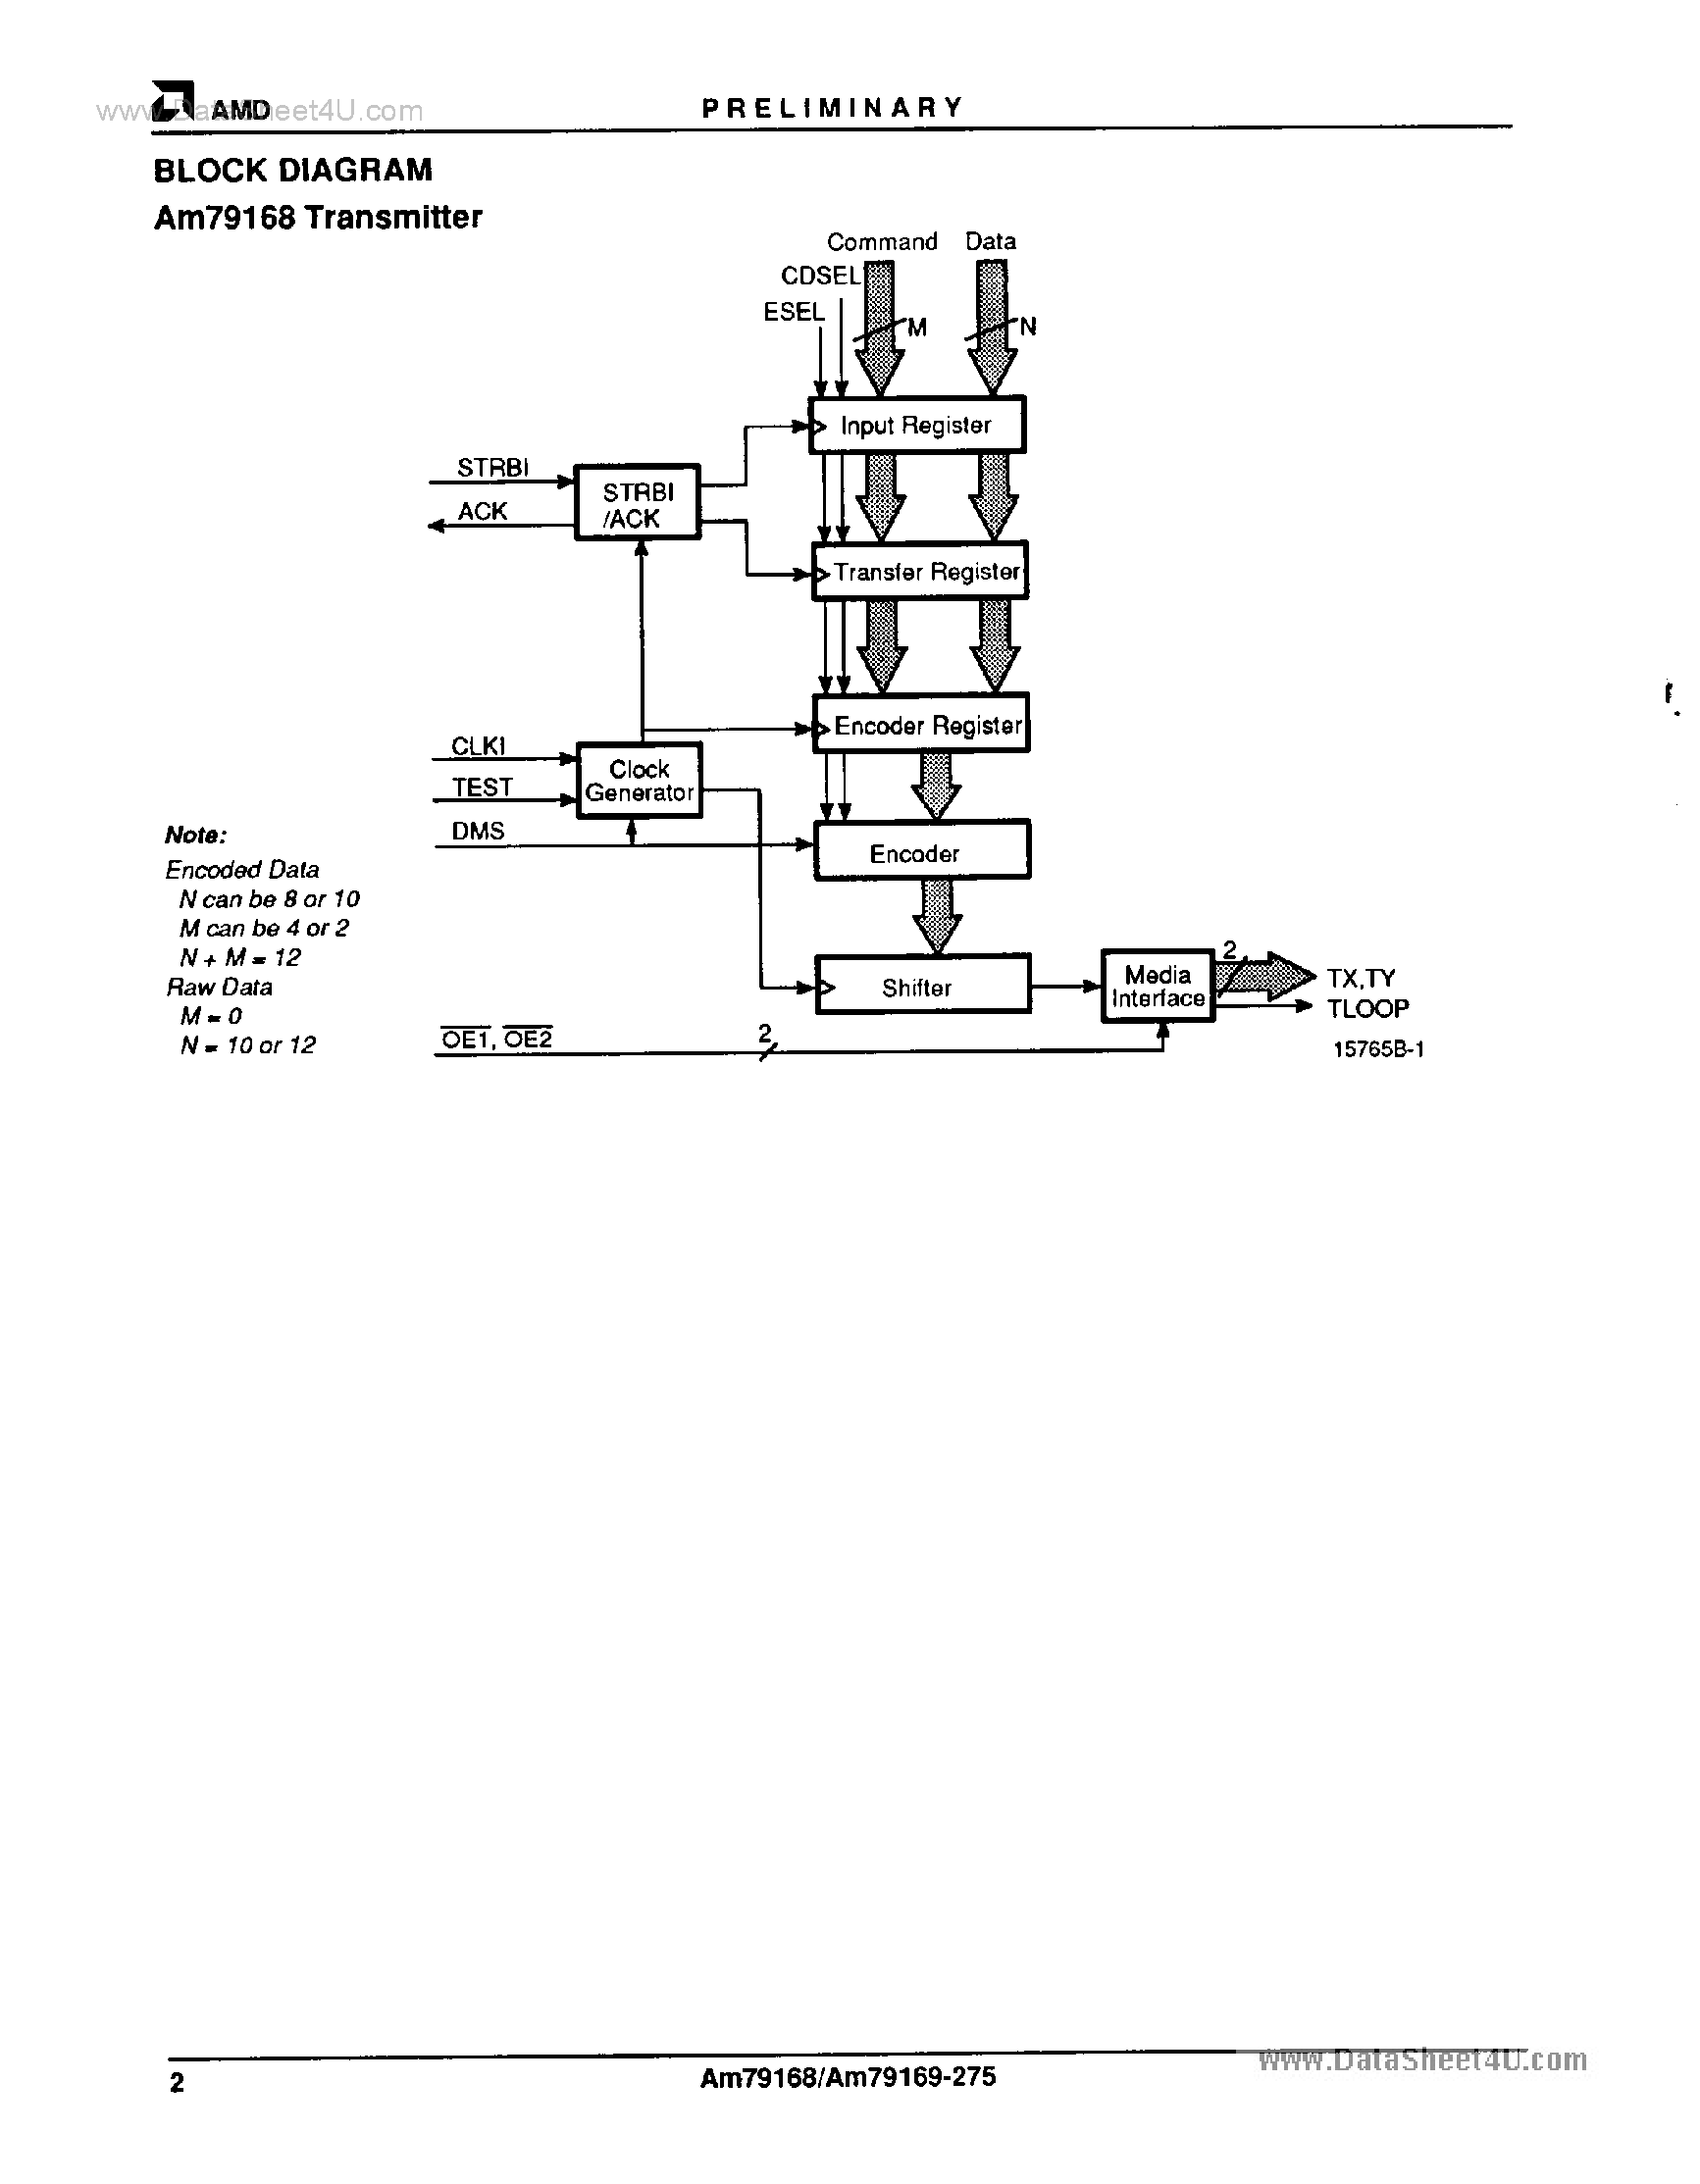 Datasheet AM79168 - (AM79168 / AM79169-275) Transmitter / Receiver page 2